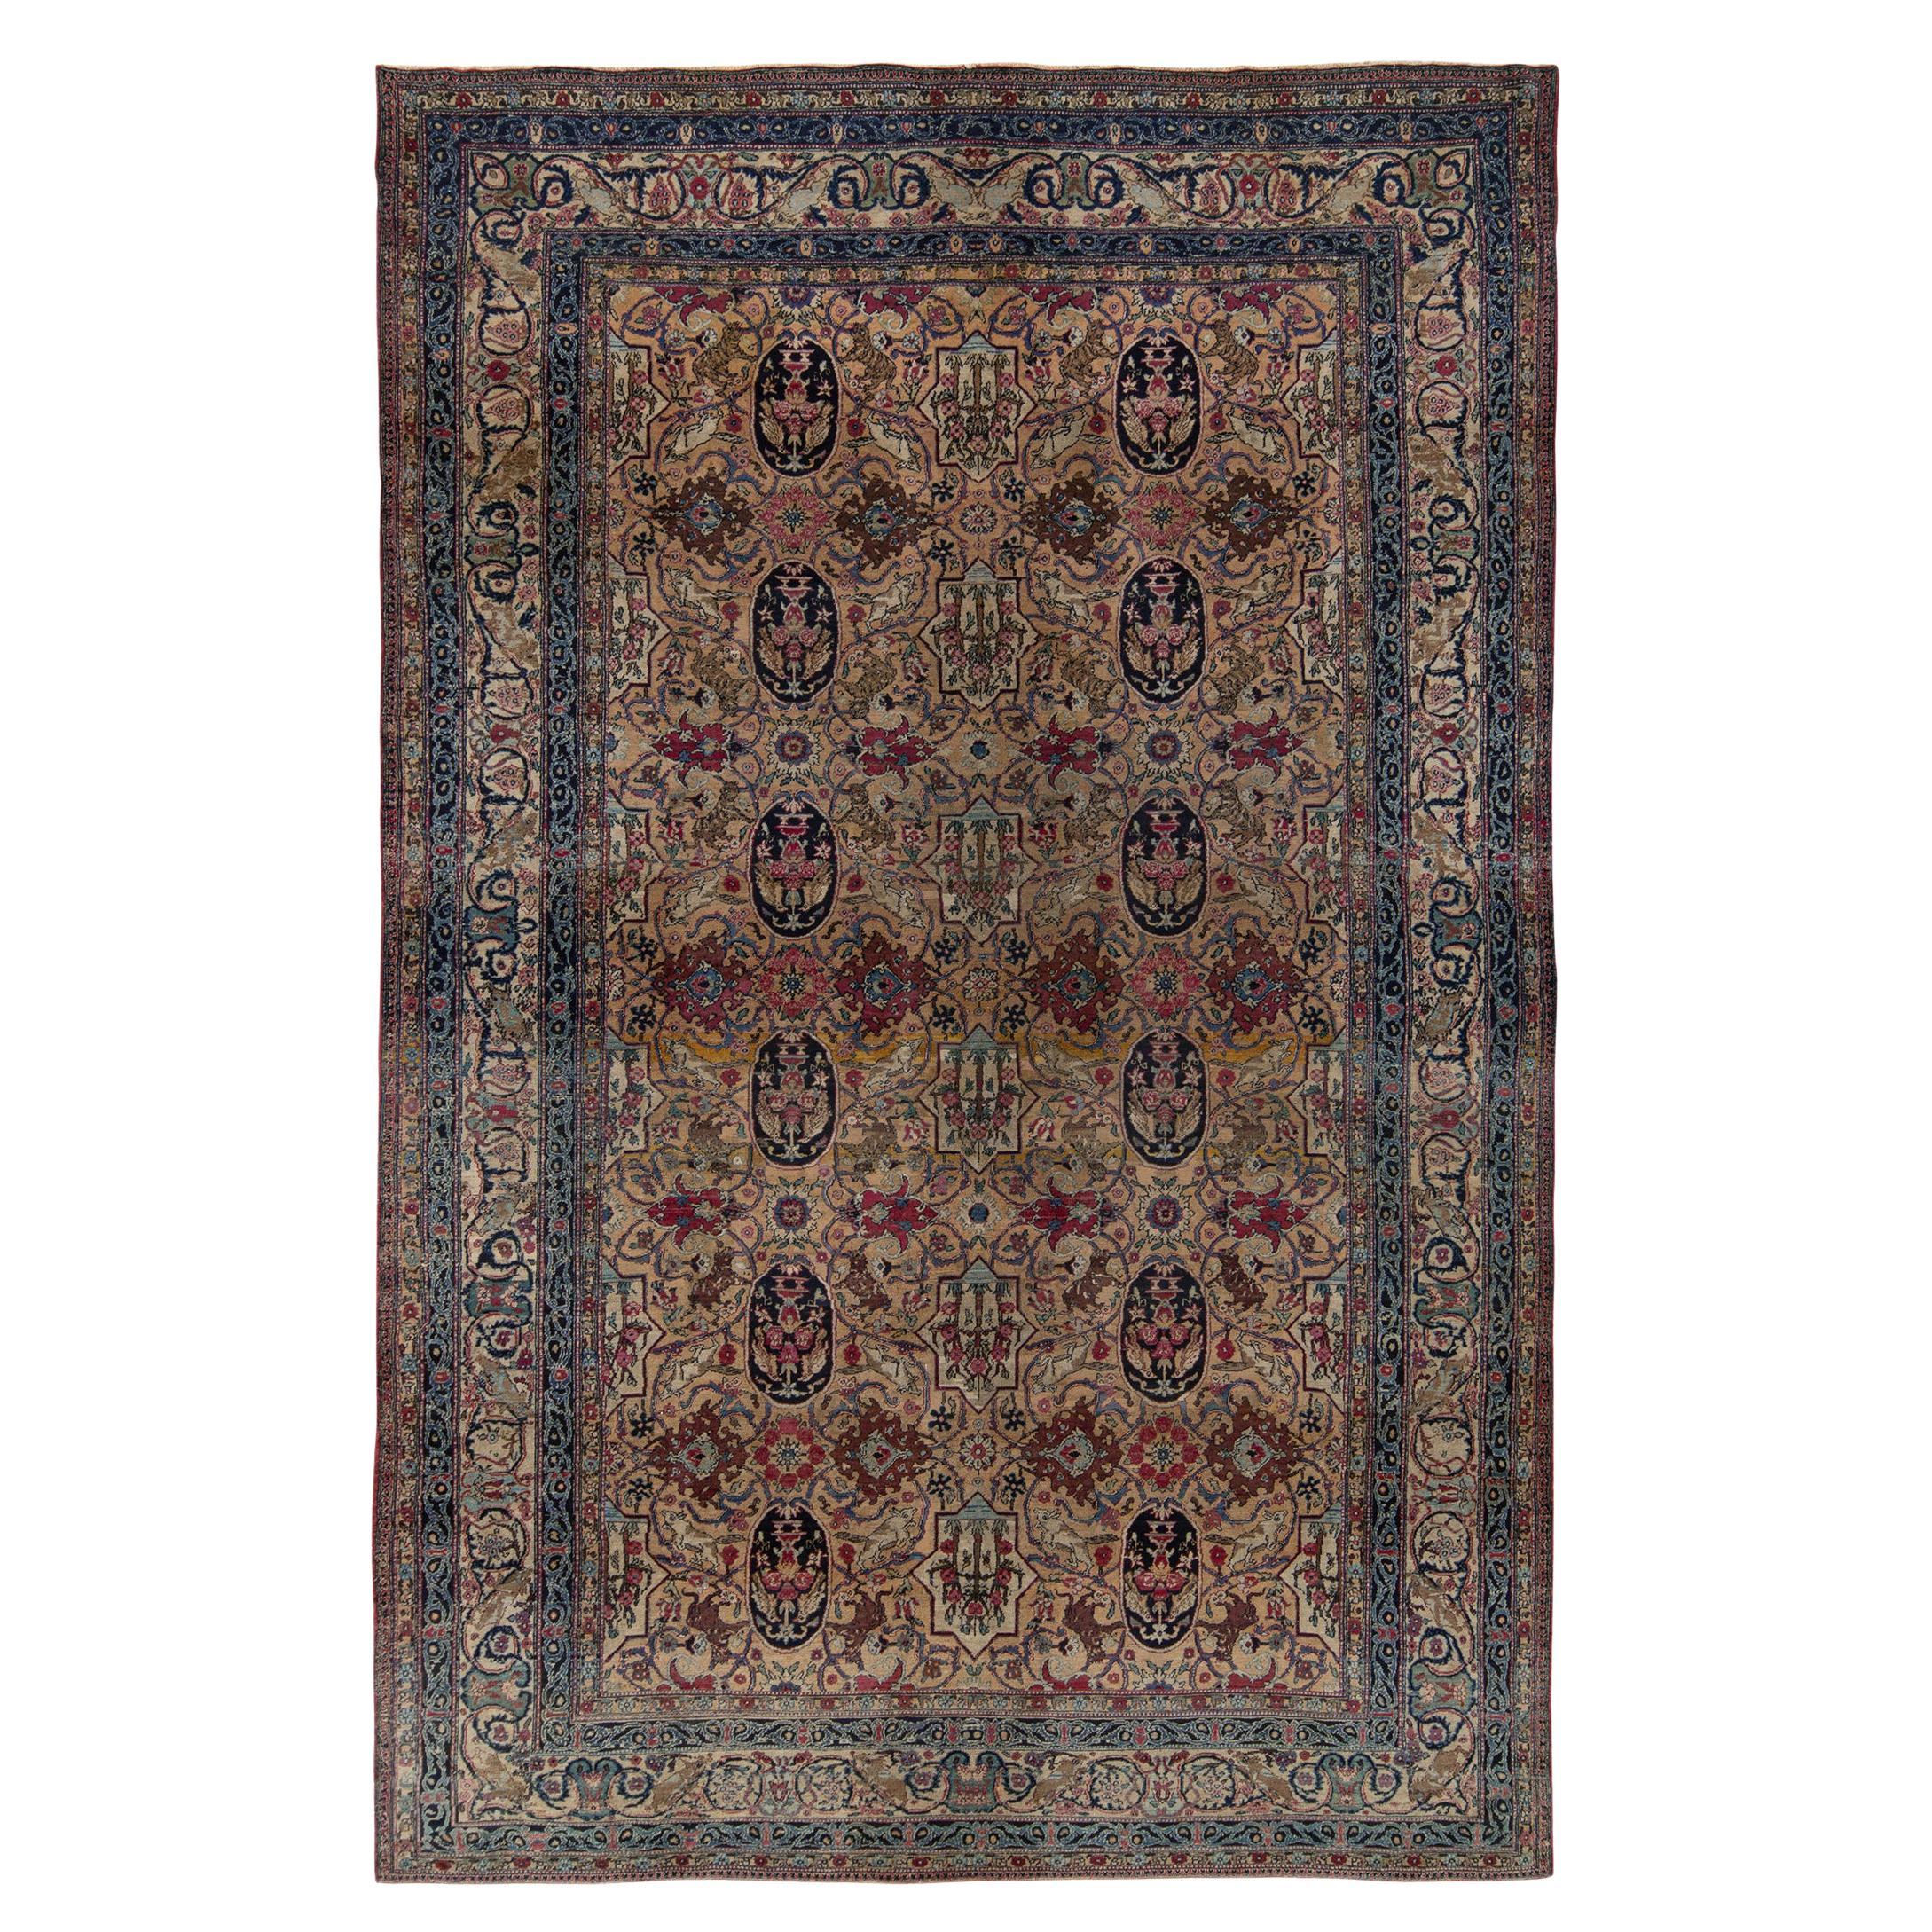 Antique Tehranian Persian rug in Royal Blue, Wine & Beige Floral by Rug & Kilim For Sale